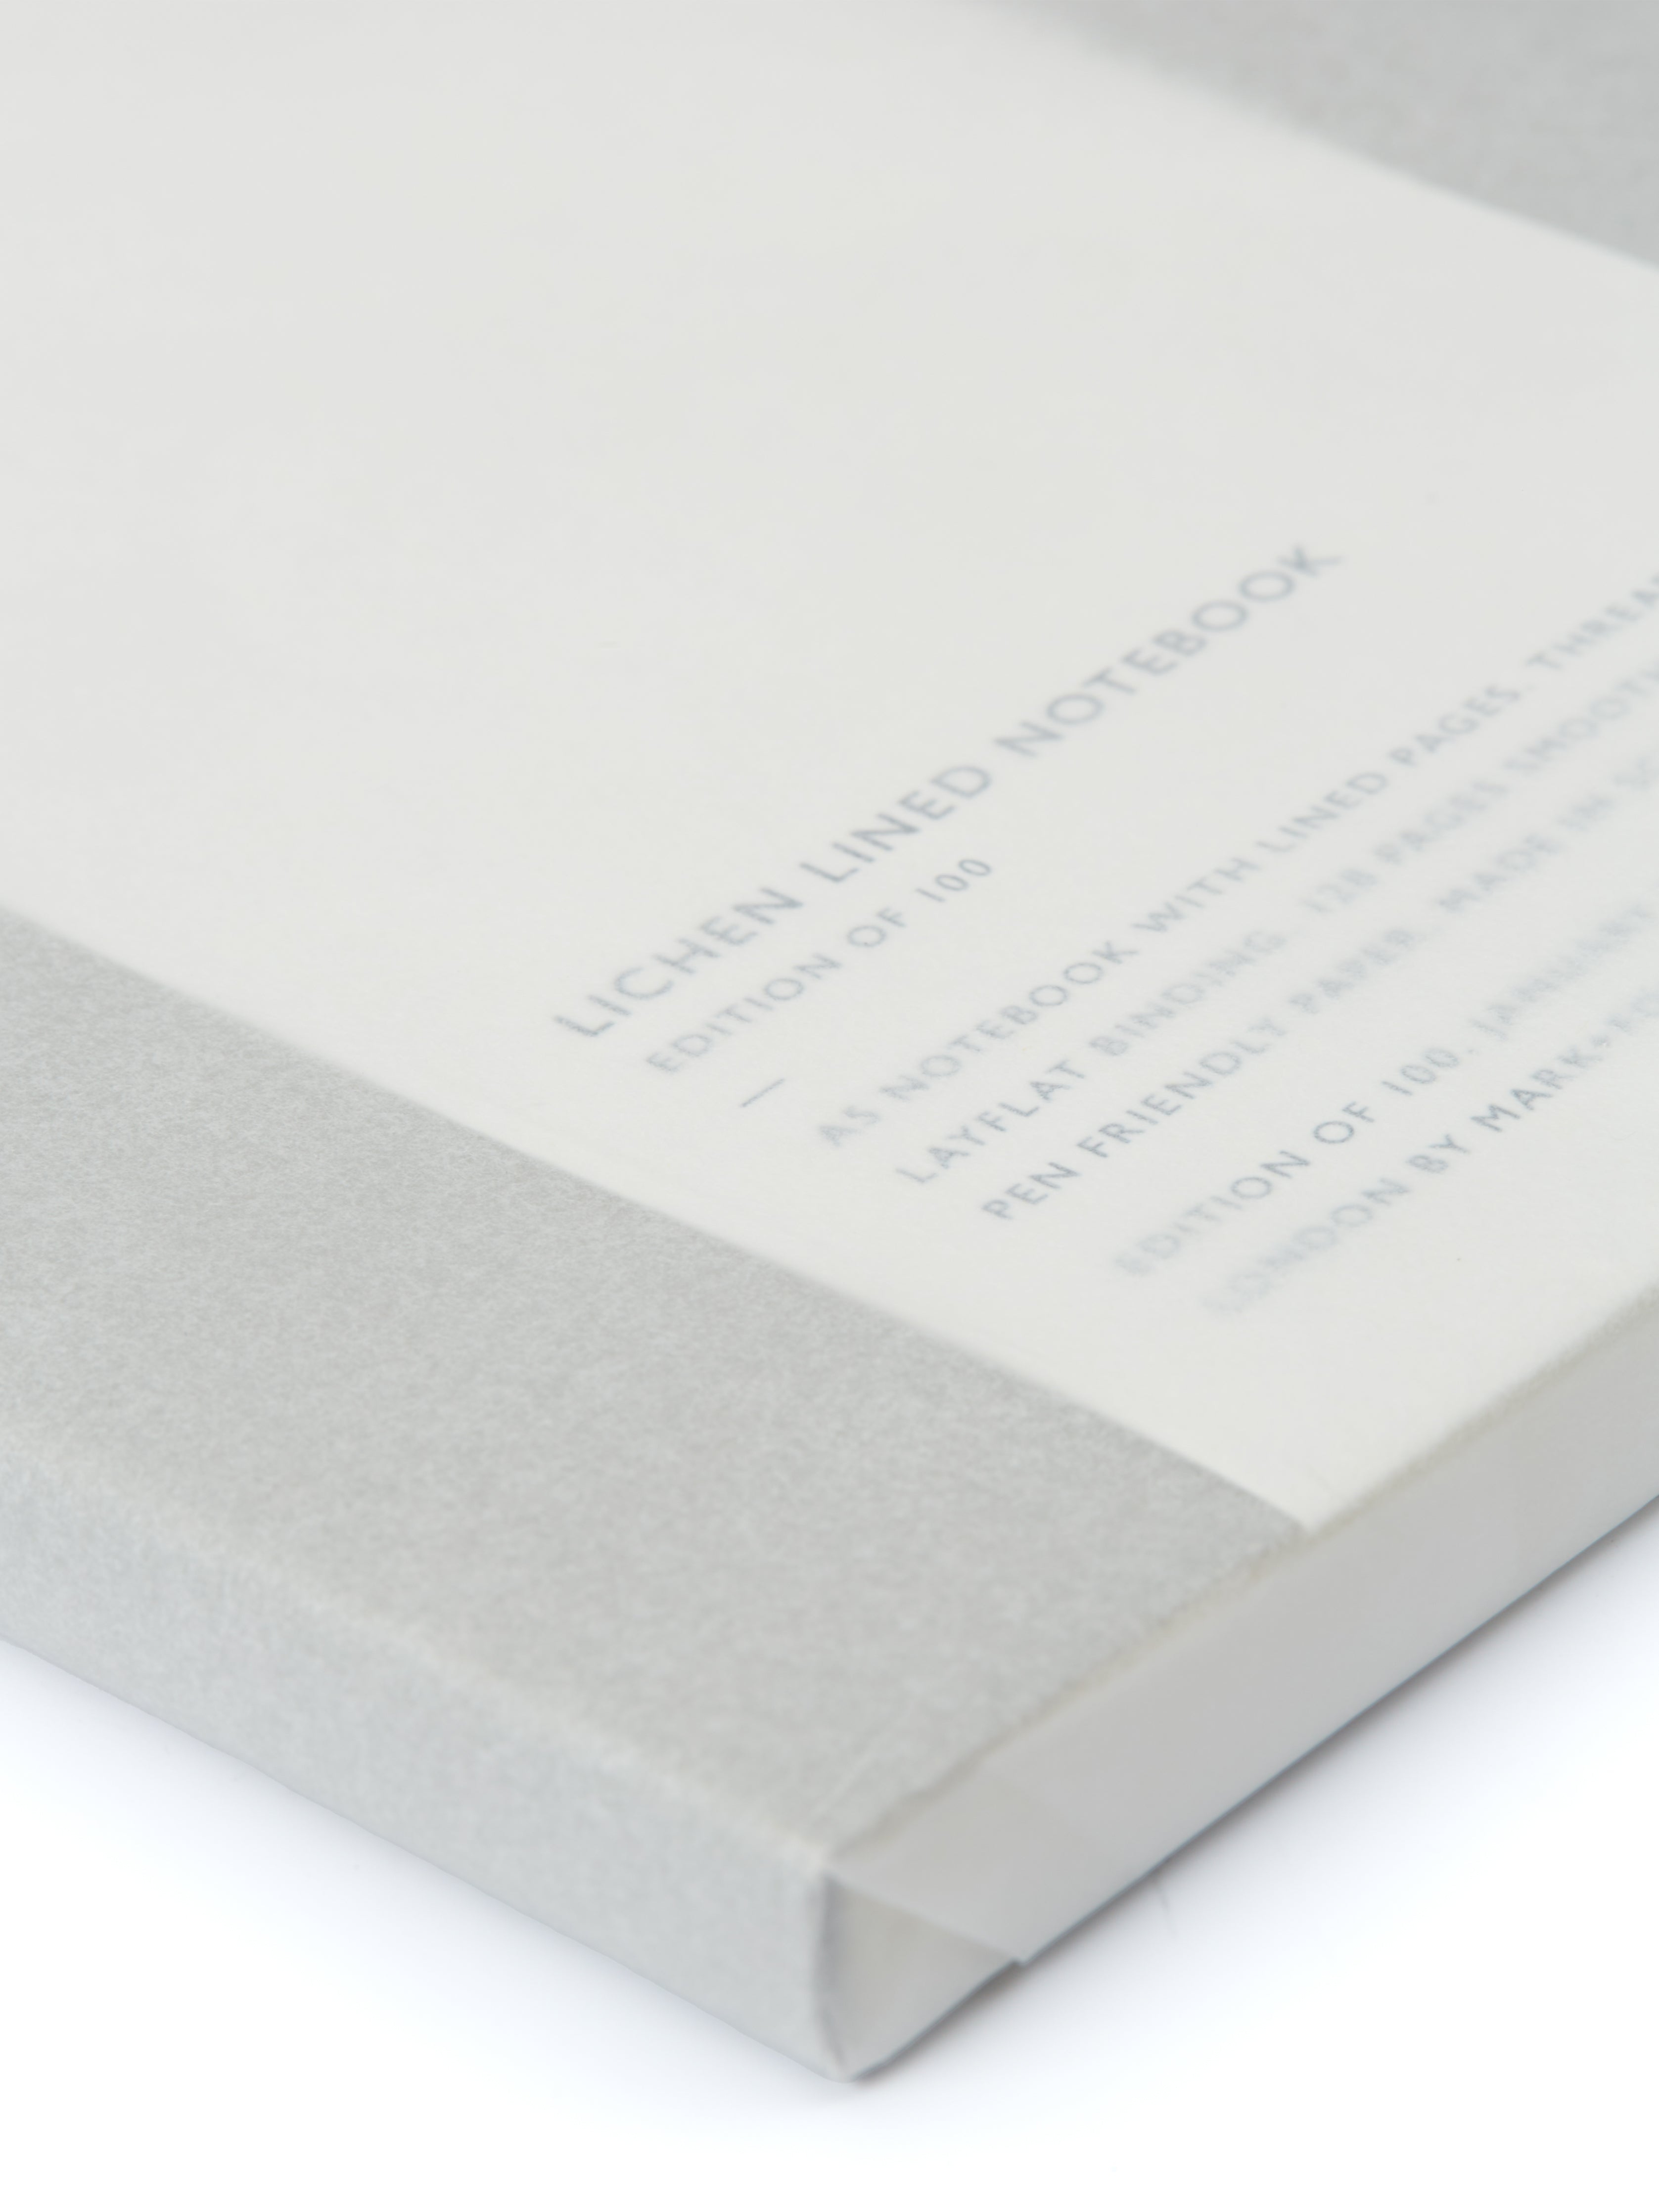 Mark + Fold Lichen Lined Notebook